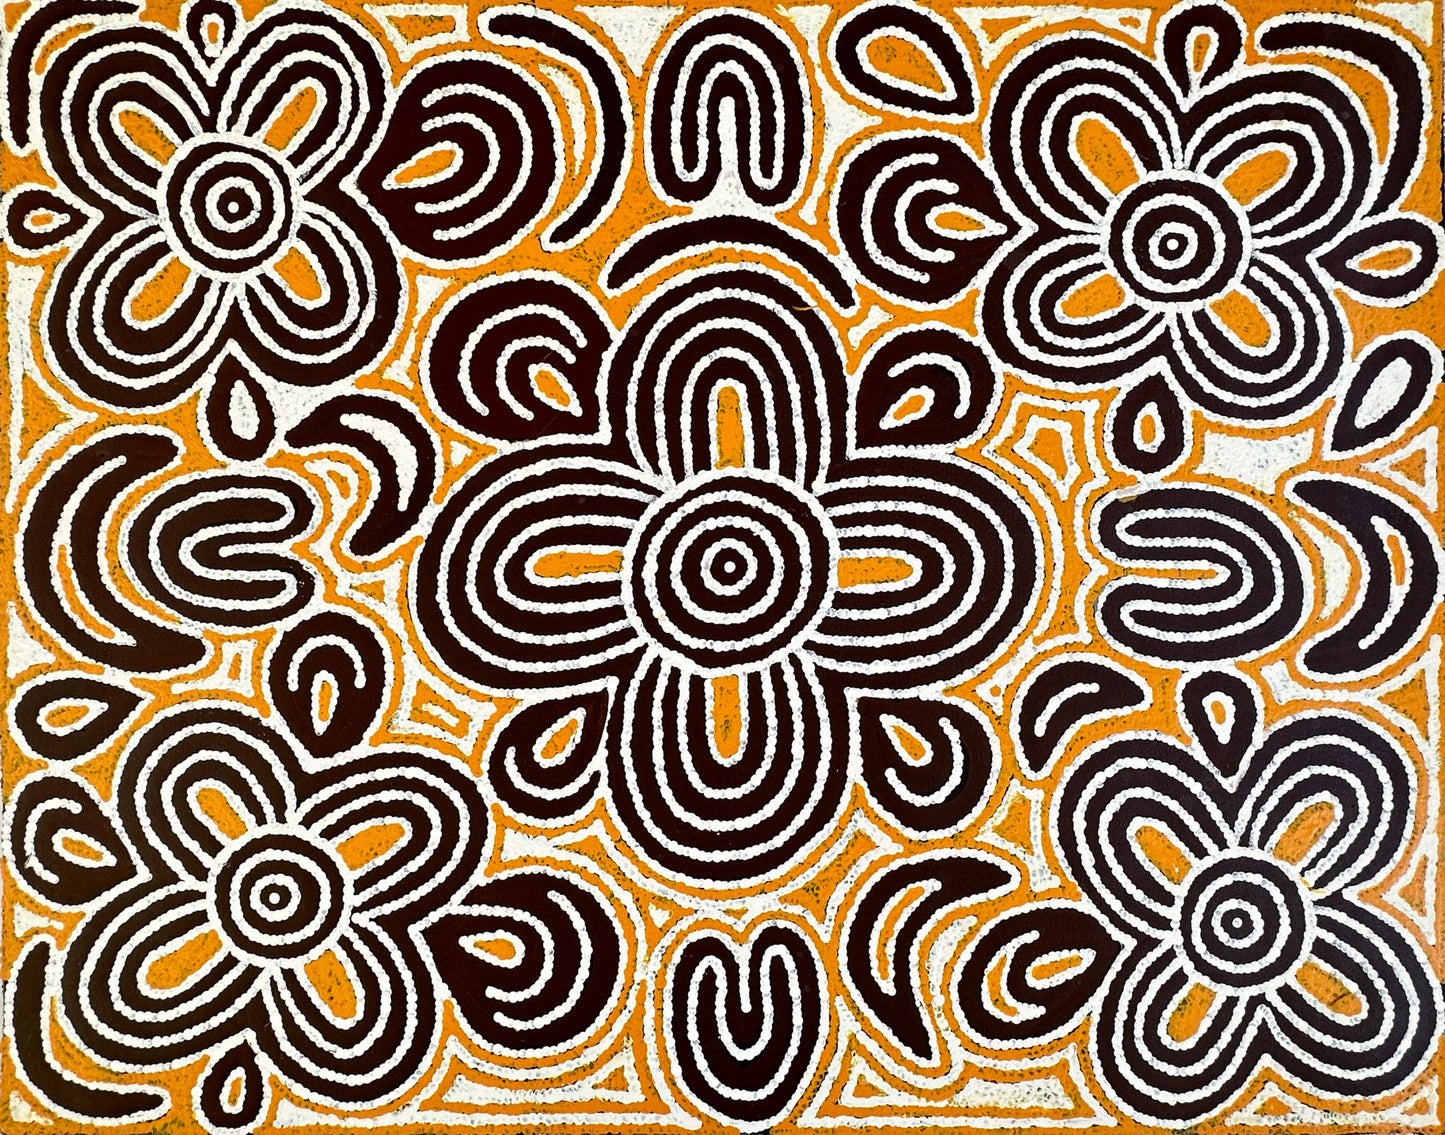 Mary Dixon Nungarrayi Papunya Indigneous Art Aboriginal Art Australian Art Traditional Art Contemporary Art Symbolism Iconography art Yellow Aboriginal Symbols